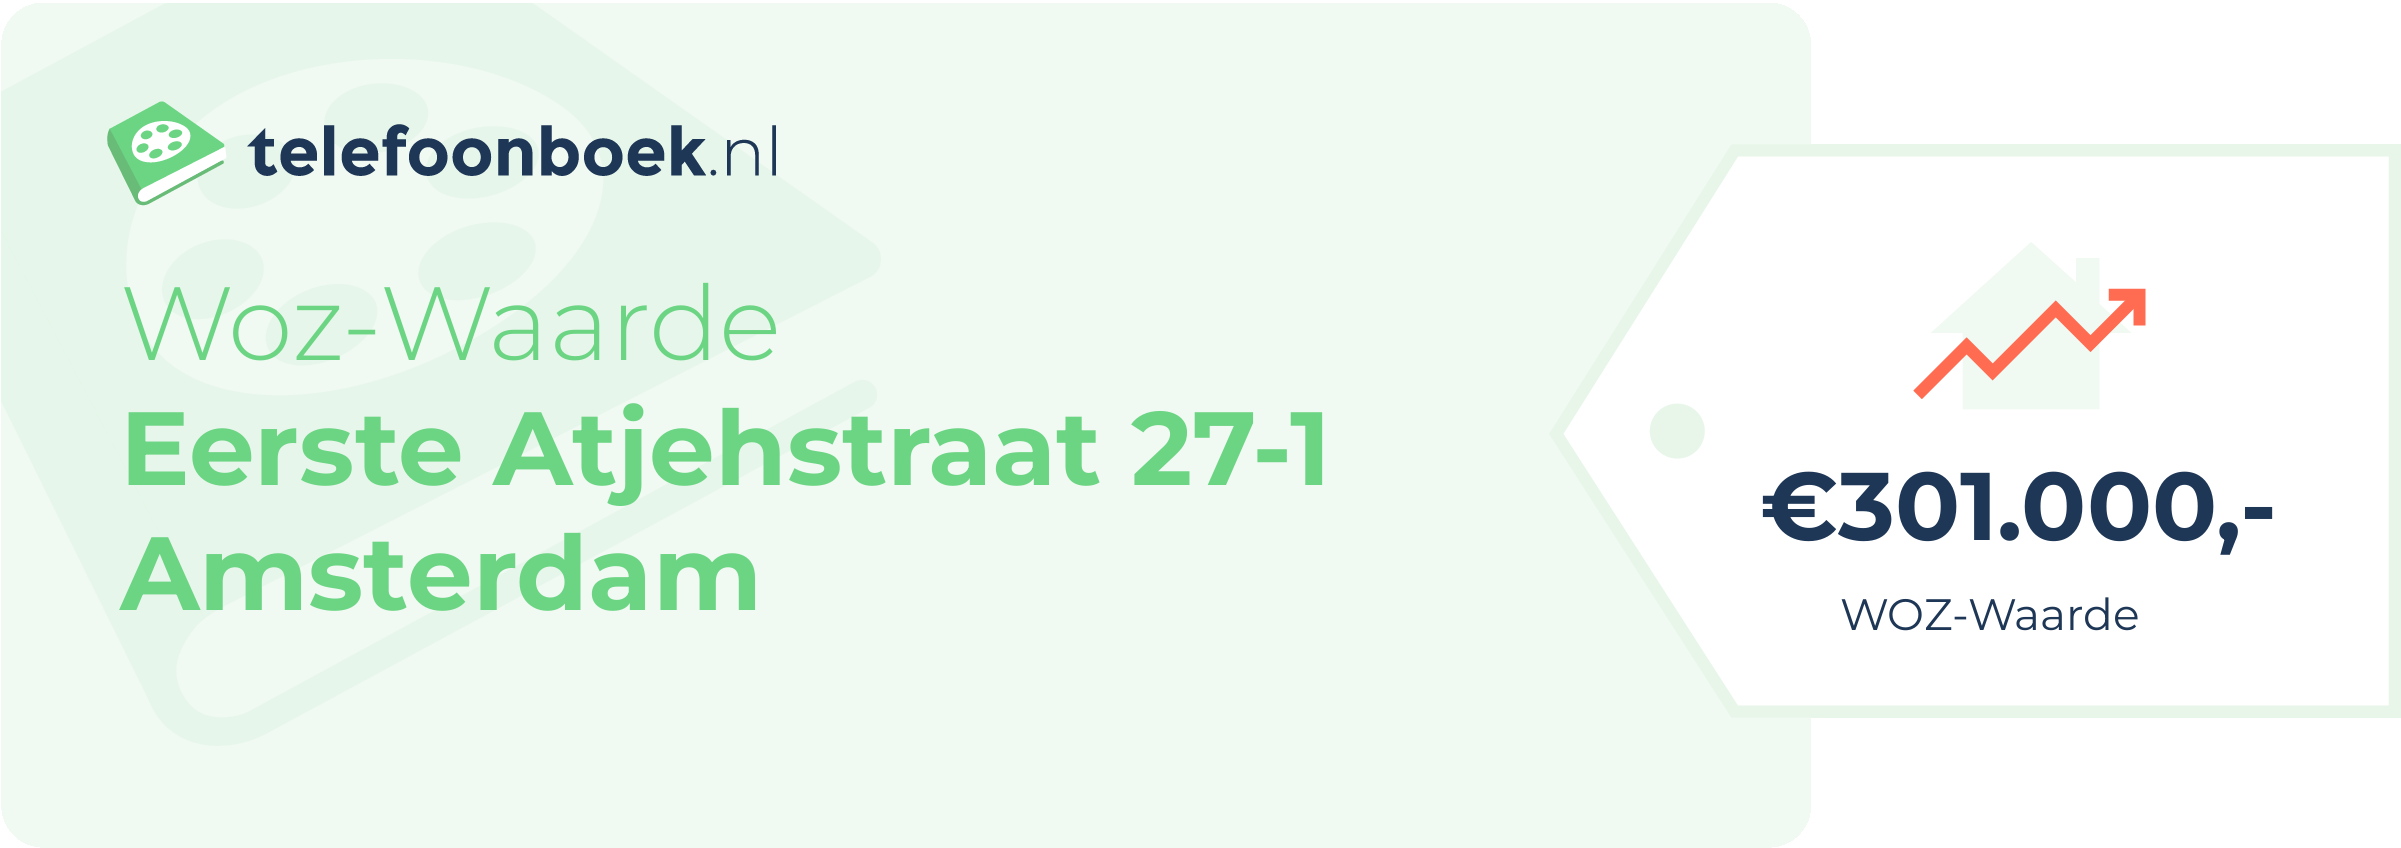 WOZ-waarde Eerste Atjehstraat 27-1 Amsterdam